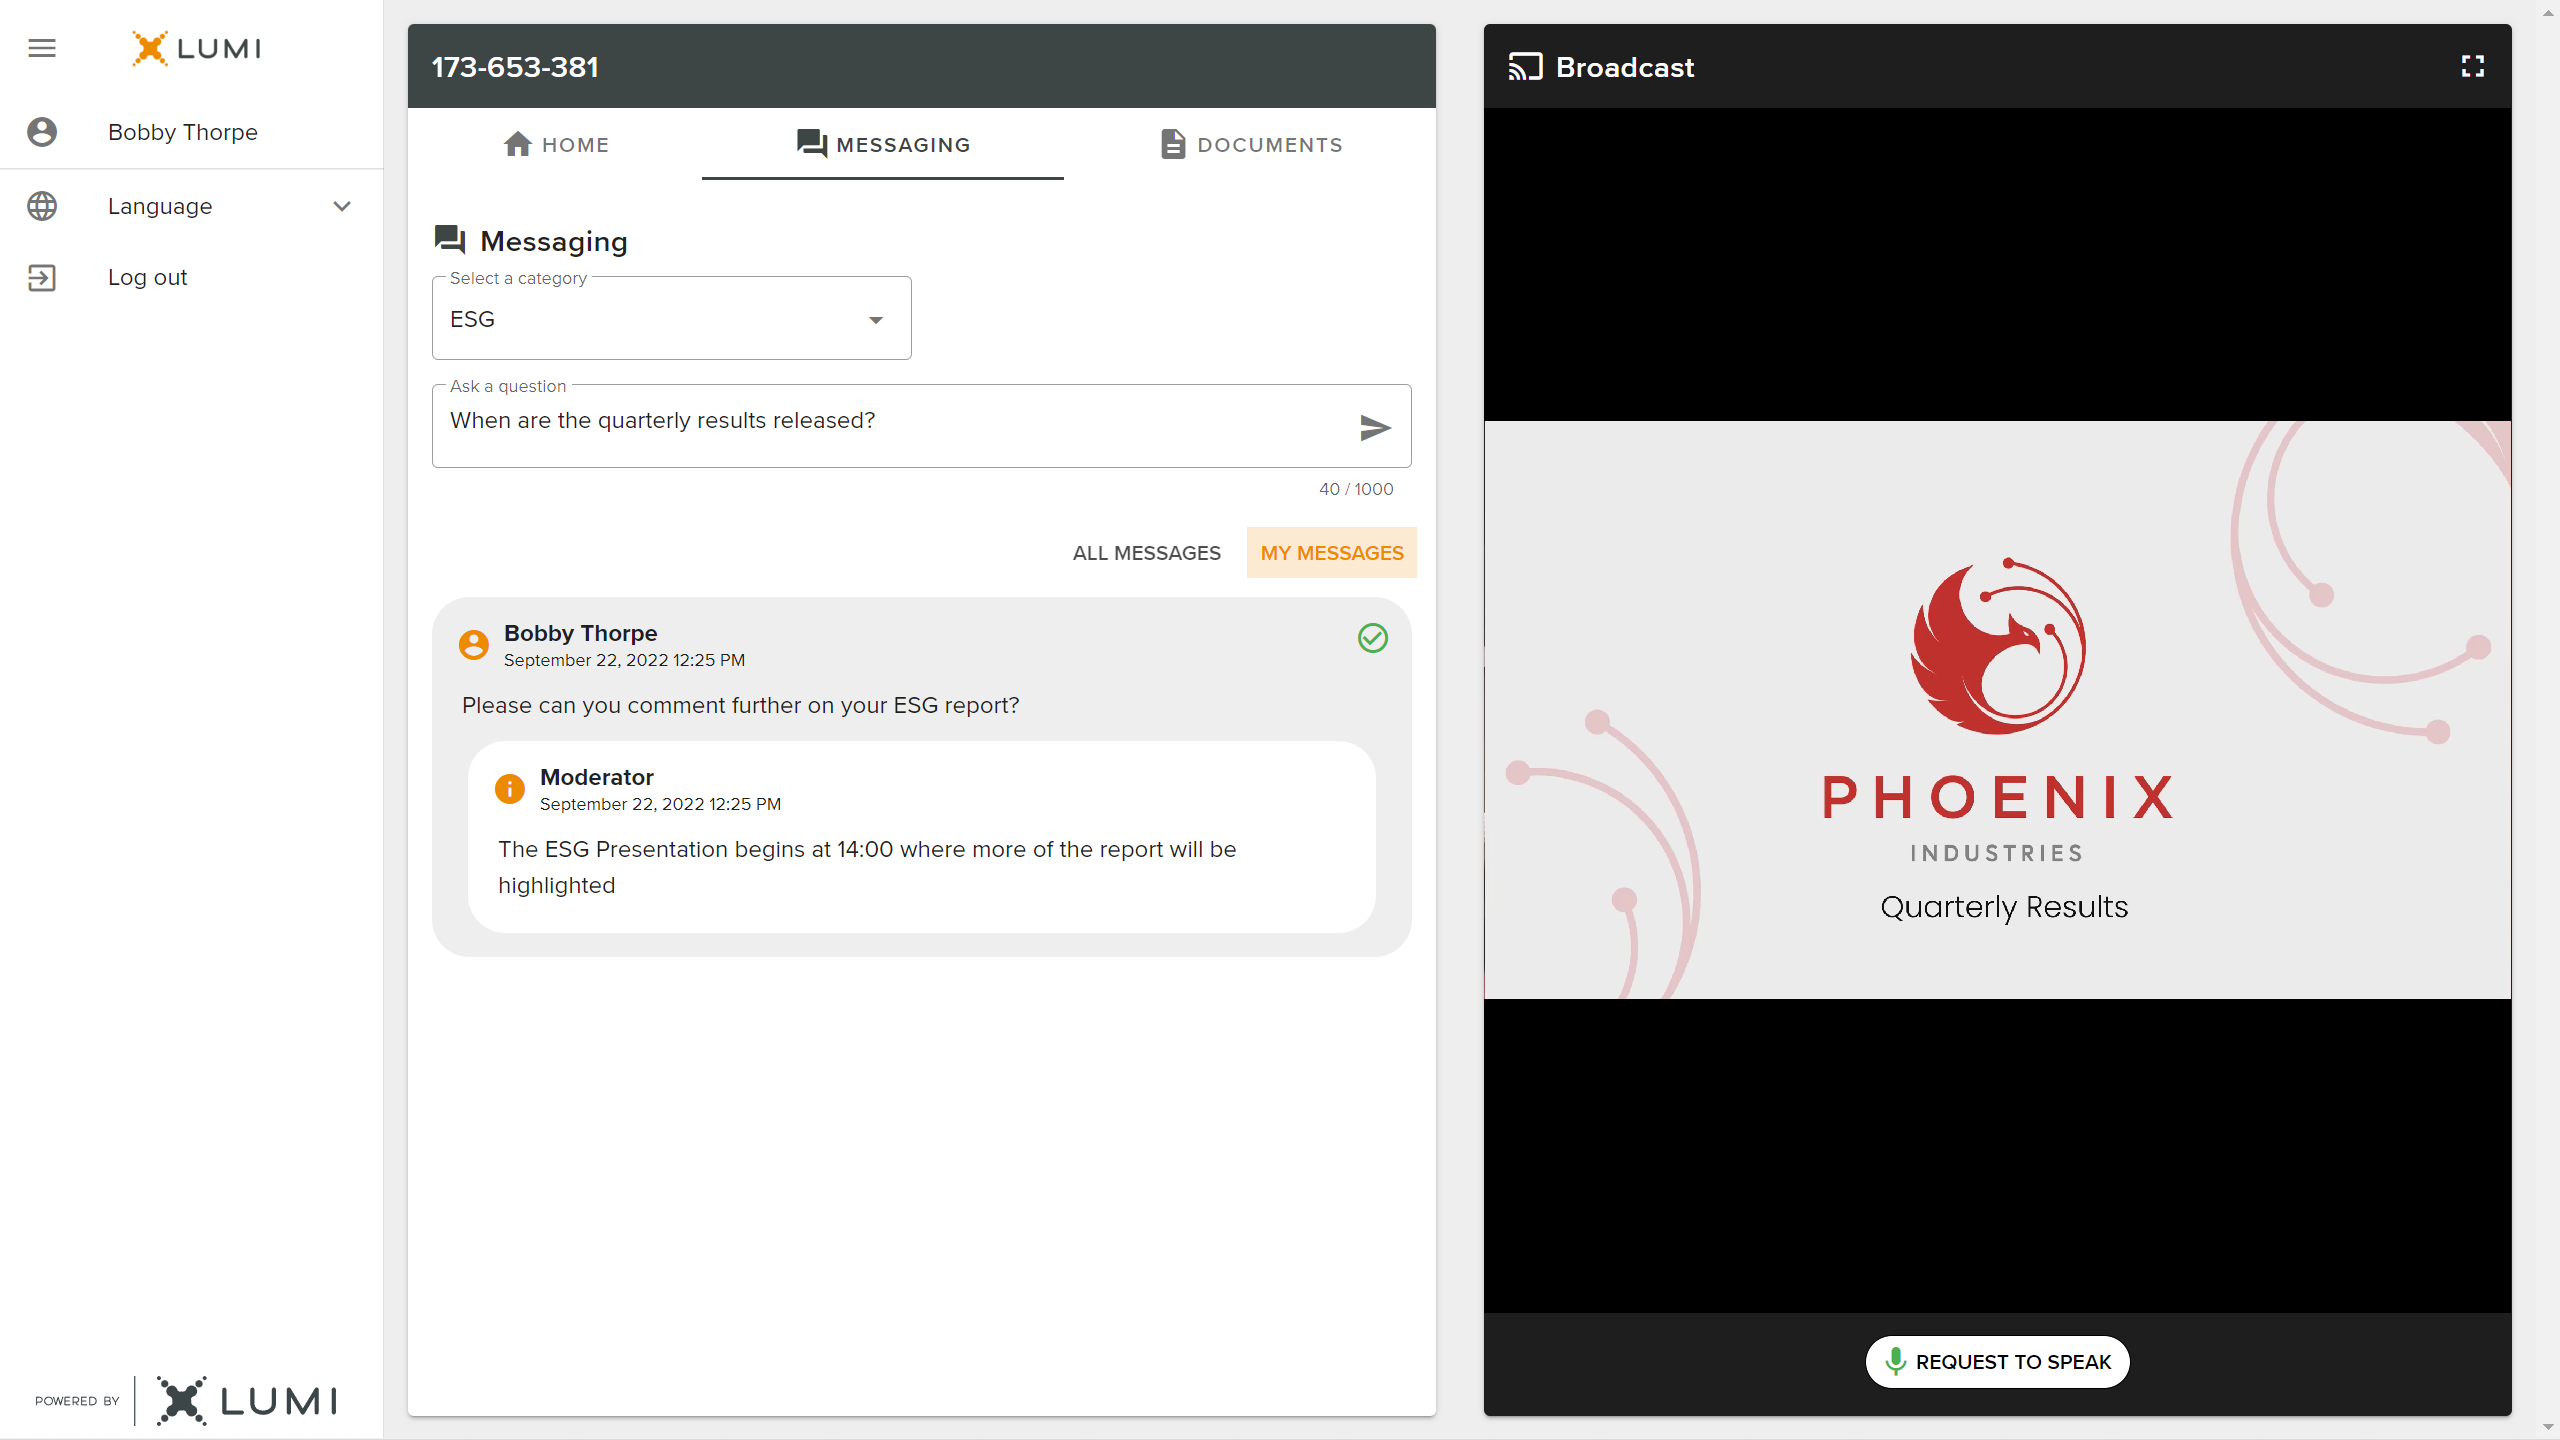 Lumi AGM Mobile - Phoenix IR Messaging Screen